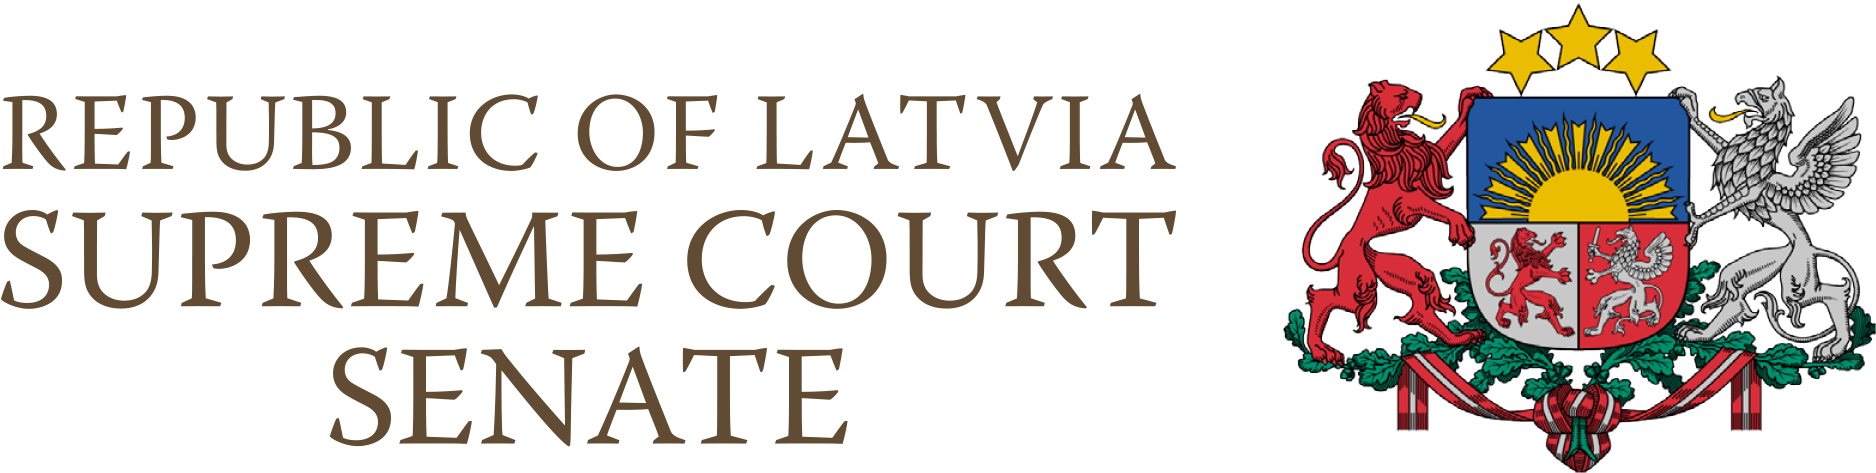 Latvia Supreme Court Senate Emblem PNG